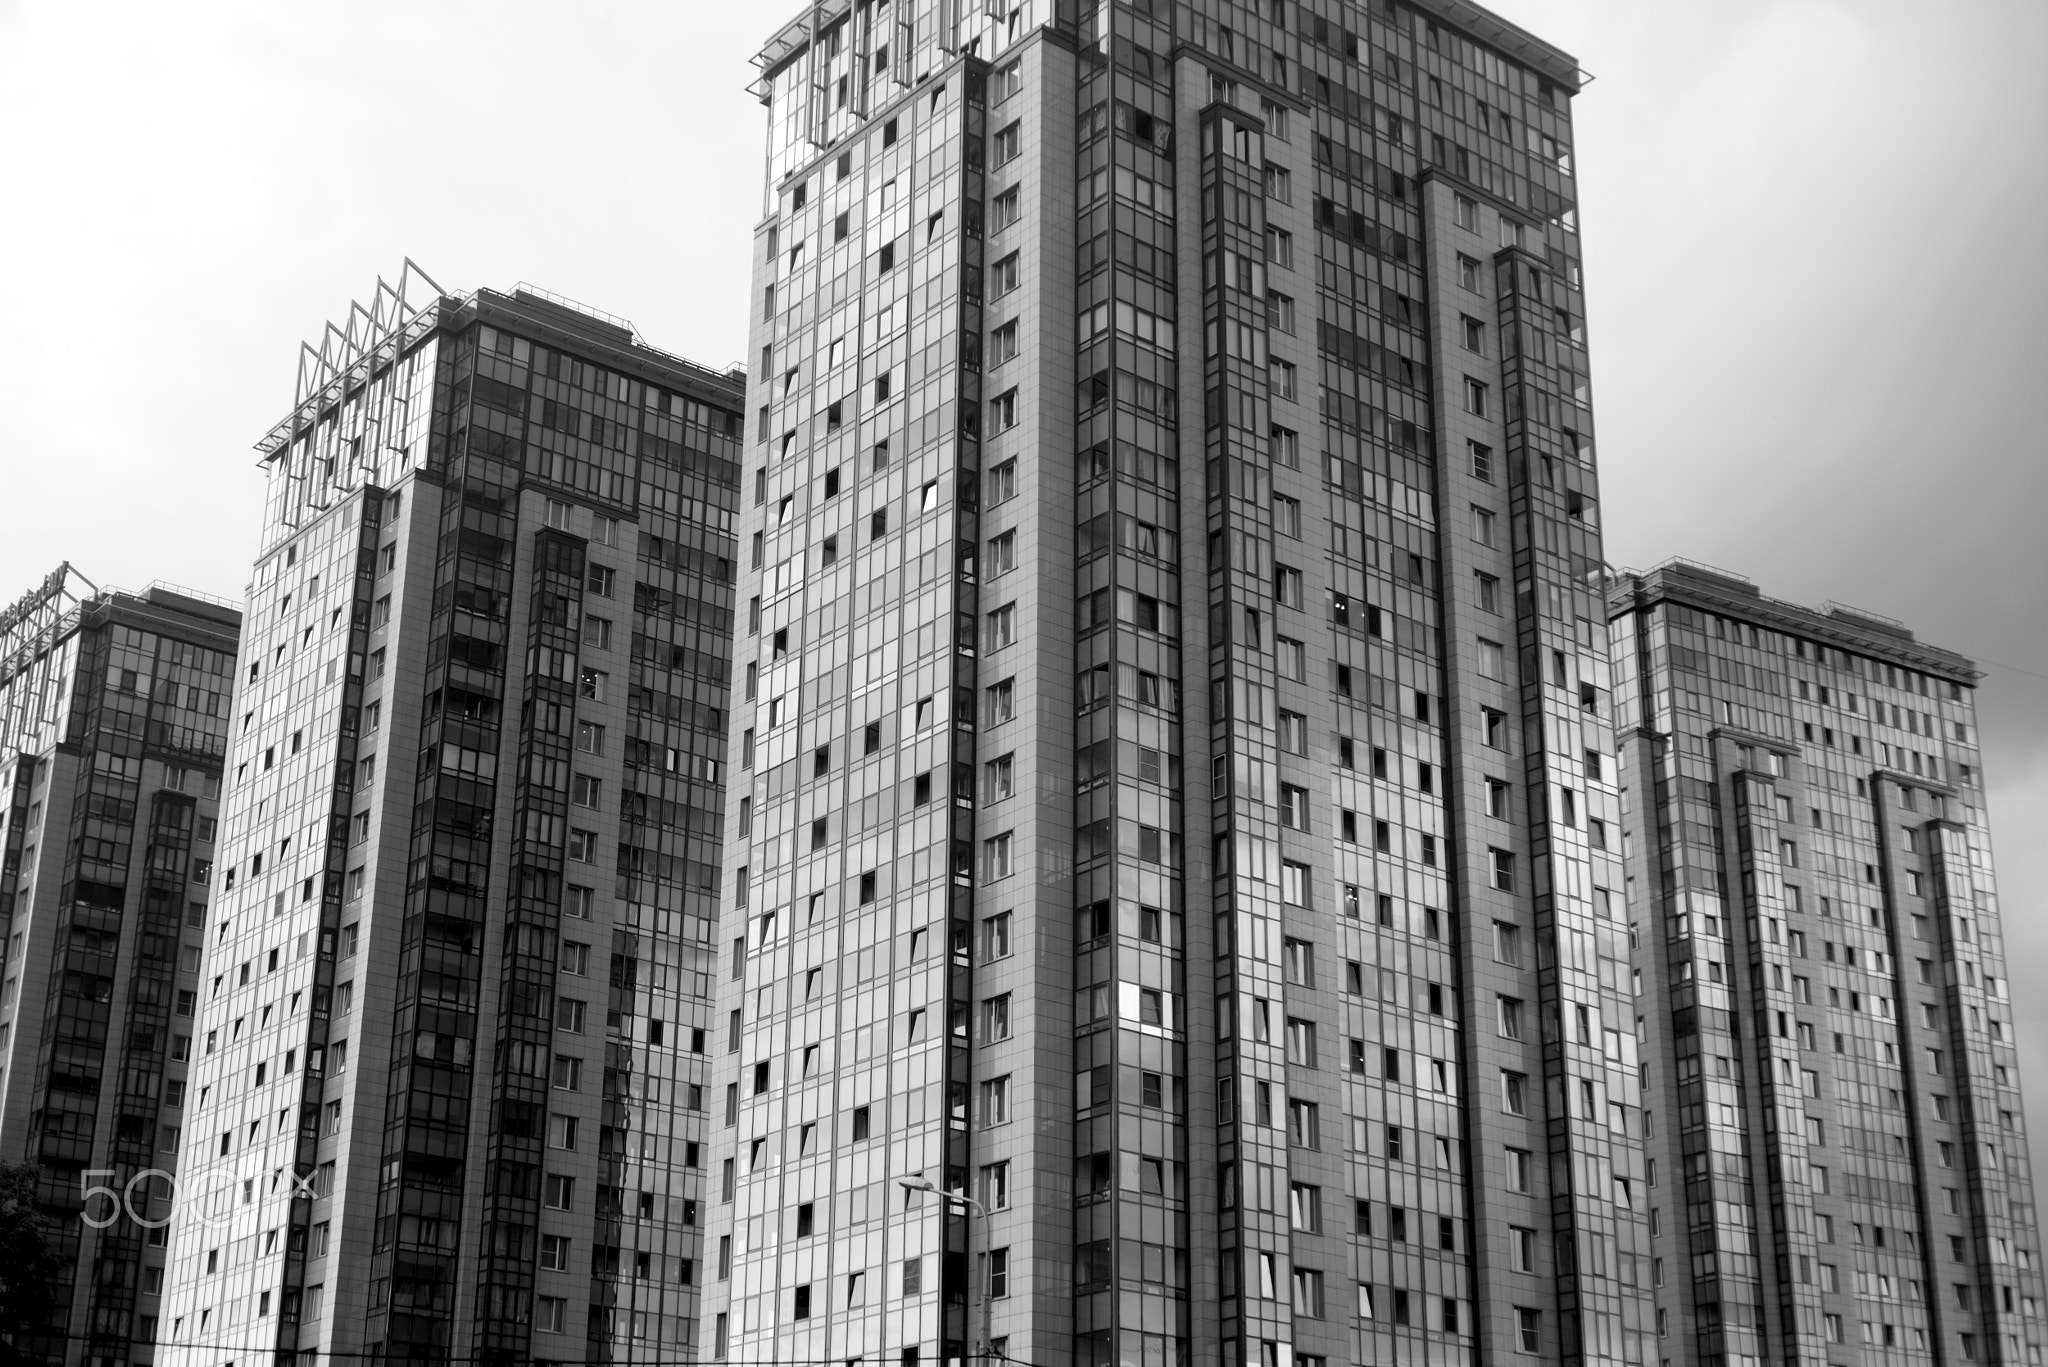 Skyscrapers housing complex